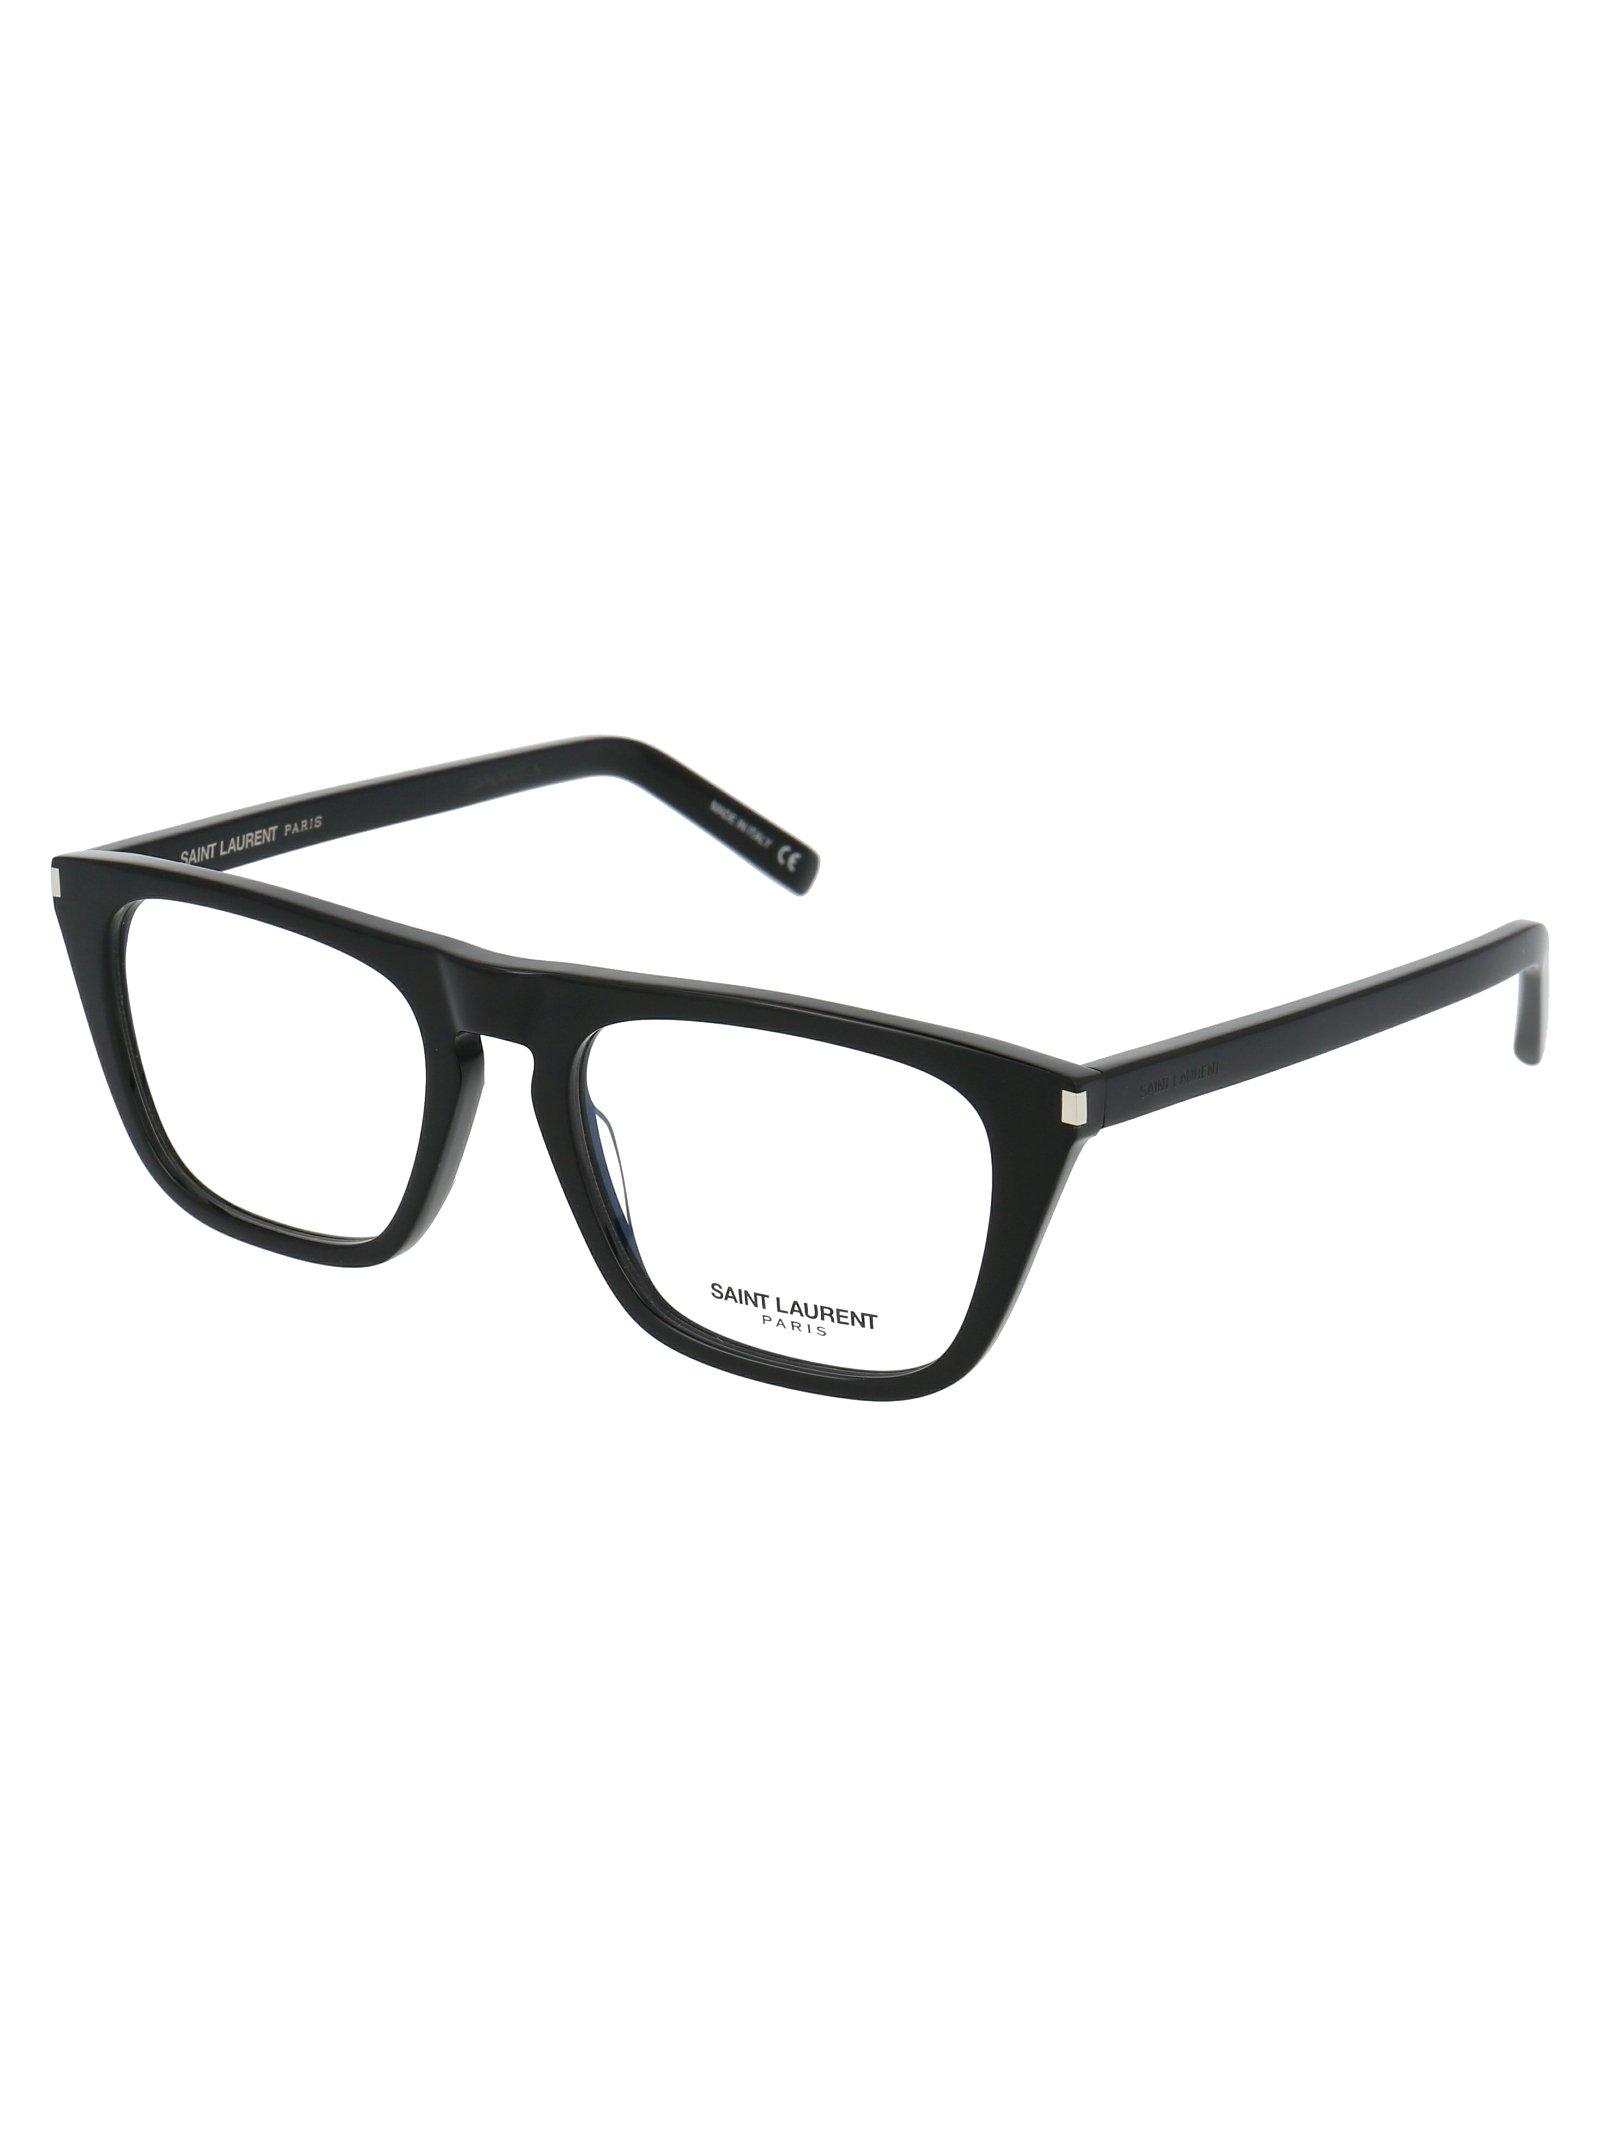 Saint Laurent Square Frame Glasses in Black - Save 7% - Lyst